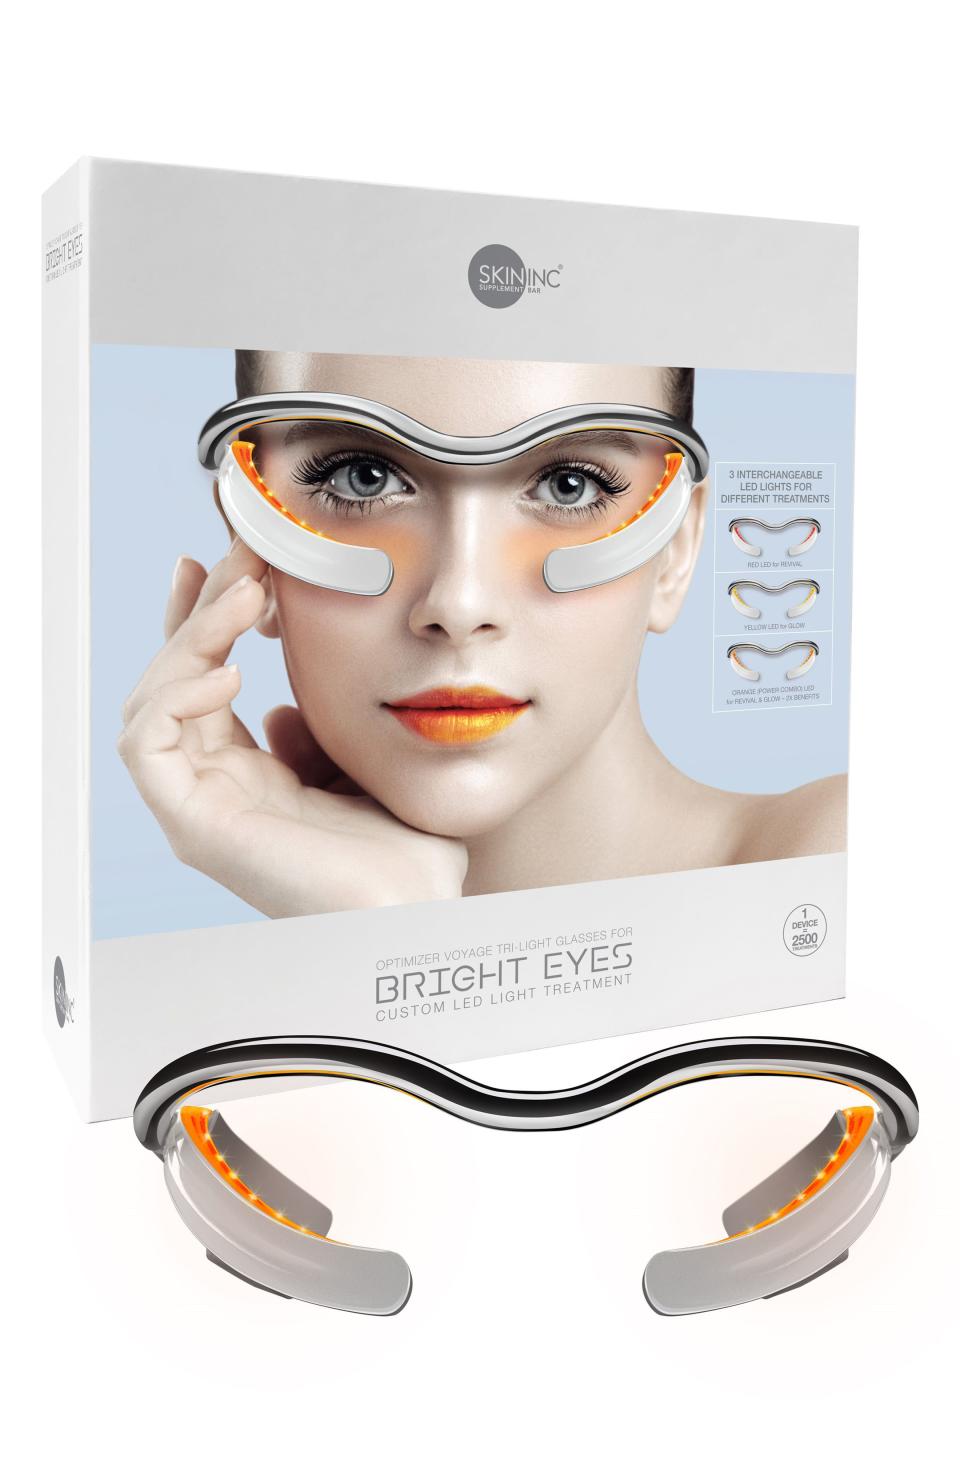 6) Optimizer Voyage Tri-Light Glasses LED Light Treatment for Eyes